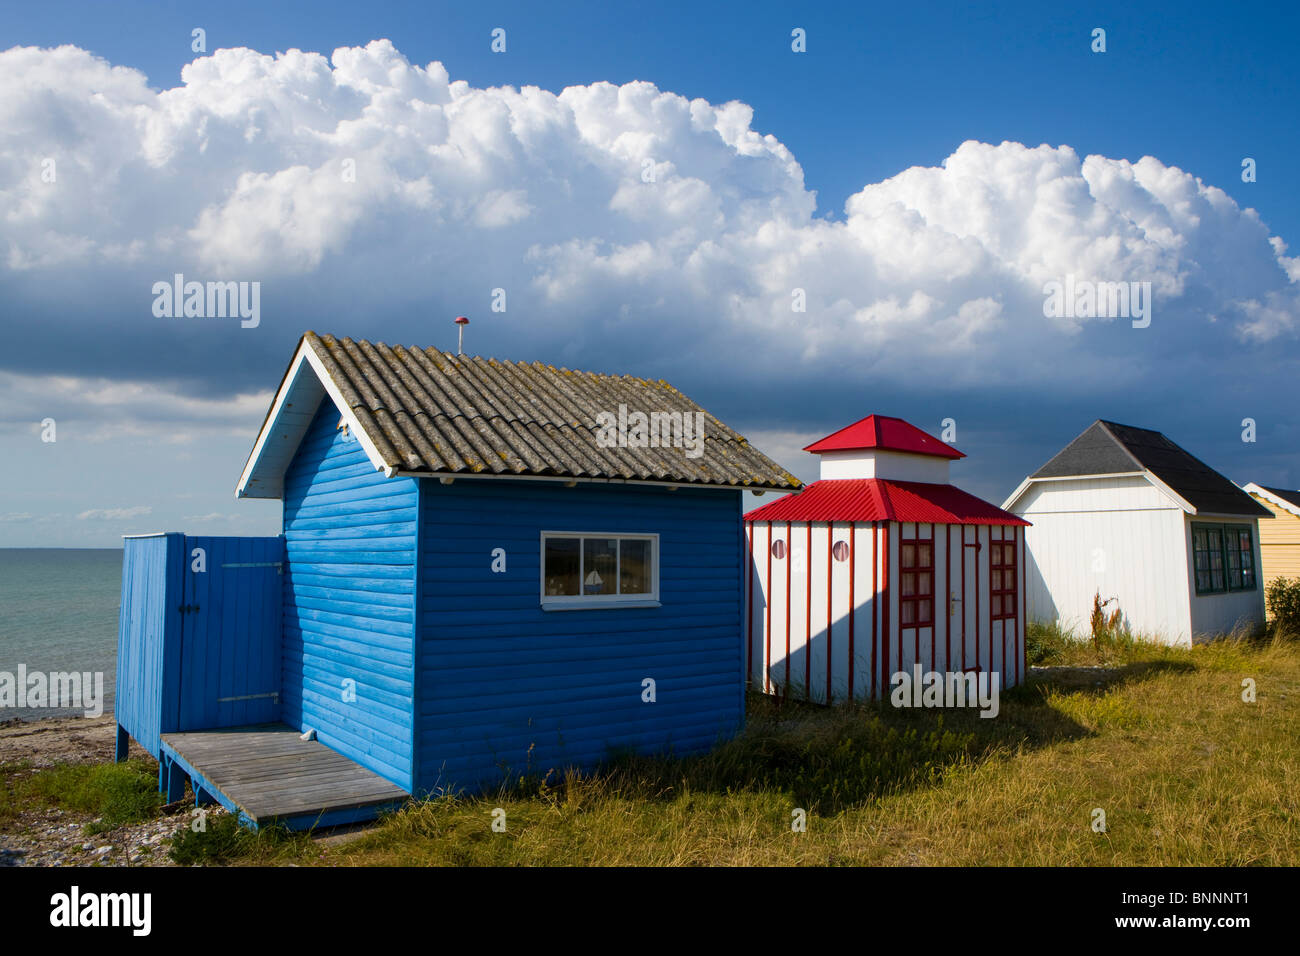 Aeroskobing Dänemark Insel Insel Aero Strand Strand Strand kleines Haus Meer Wolken Stockfoto